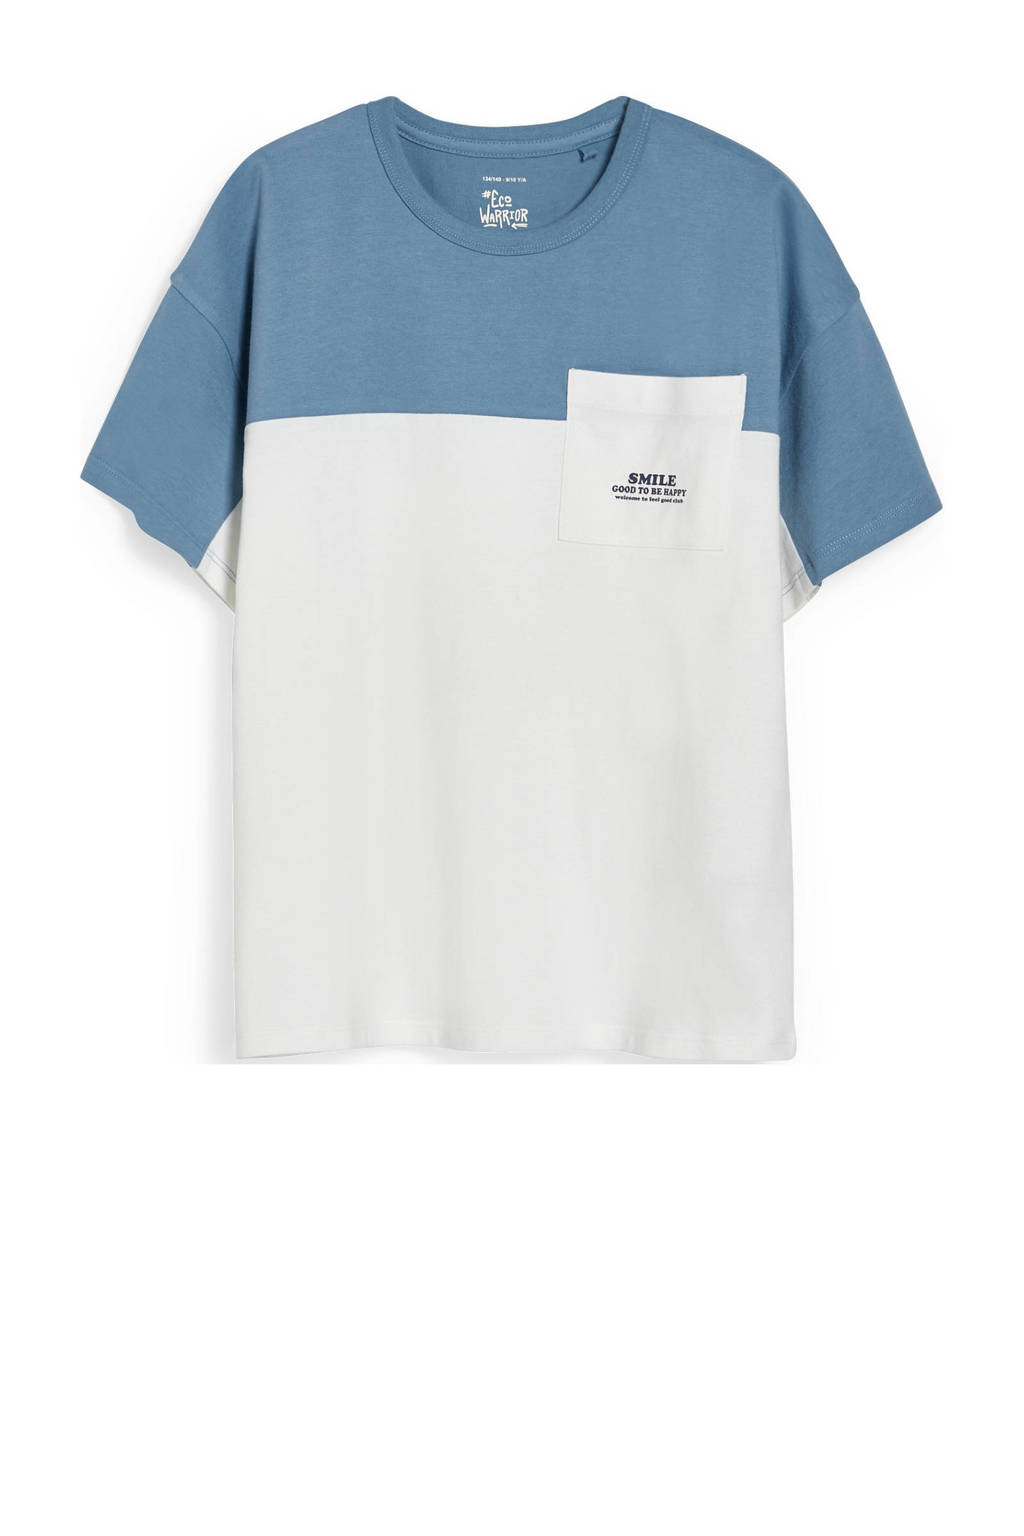 C&A T-shirt blauw/wit